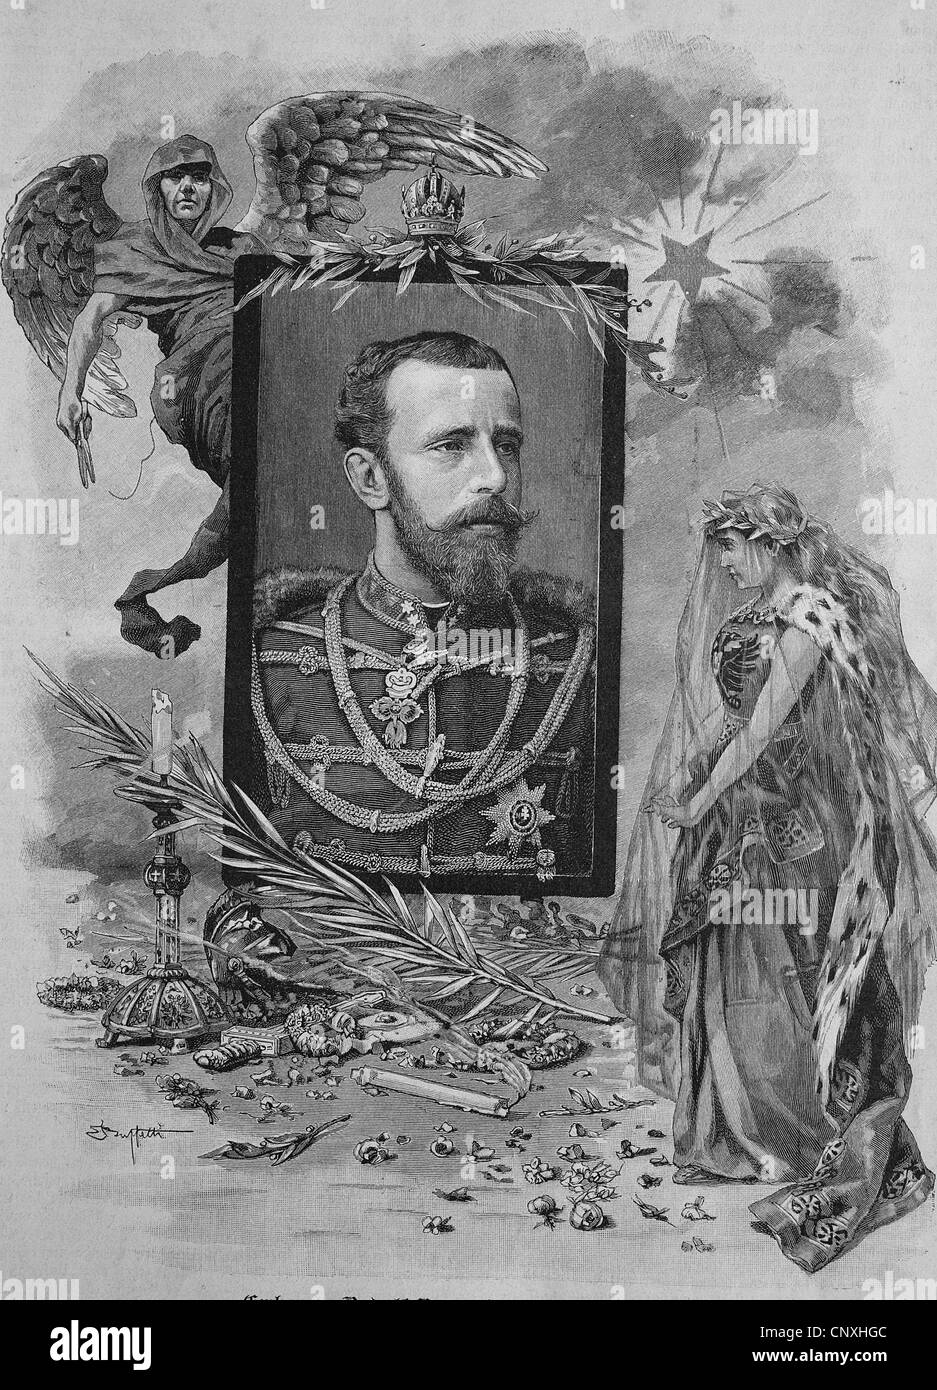 Crown Prince Rudolf Archduke of Austria-Hungary, 1858 - 1889, historical engraving, 1883 Stock Photo